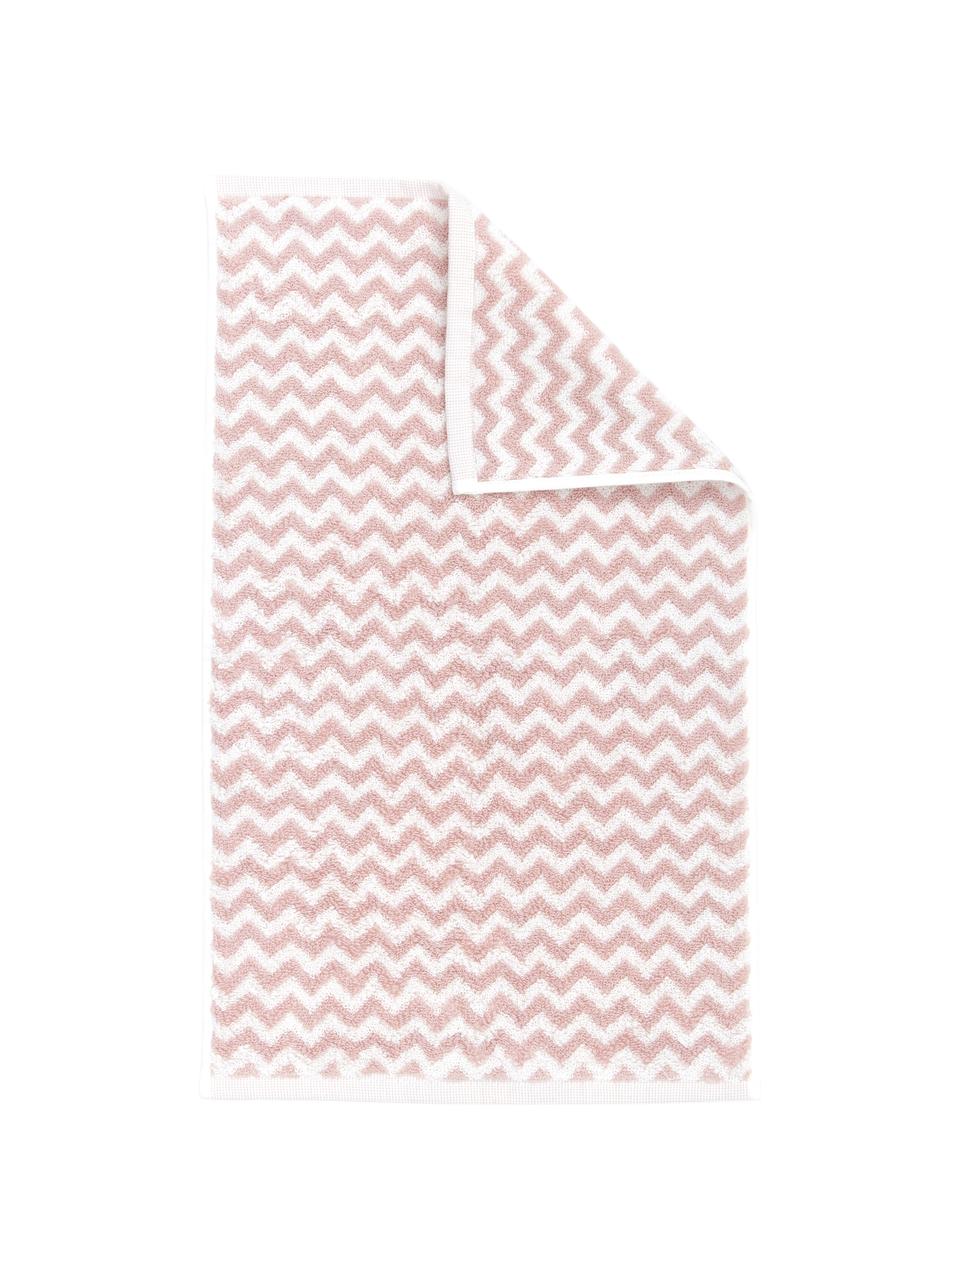 Handdoek Liv met zigzag patroon, 2 stuks, 100% katoen, middelzware kwaliteit, 550 g/m², Roze & crèmewit, patroon, Gastendoekje, B 30 x L 50 cm, 2 stuks